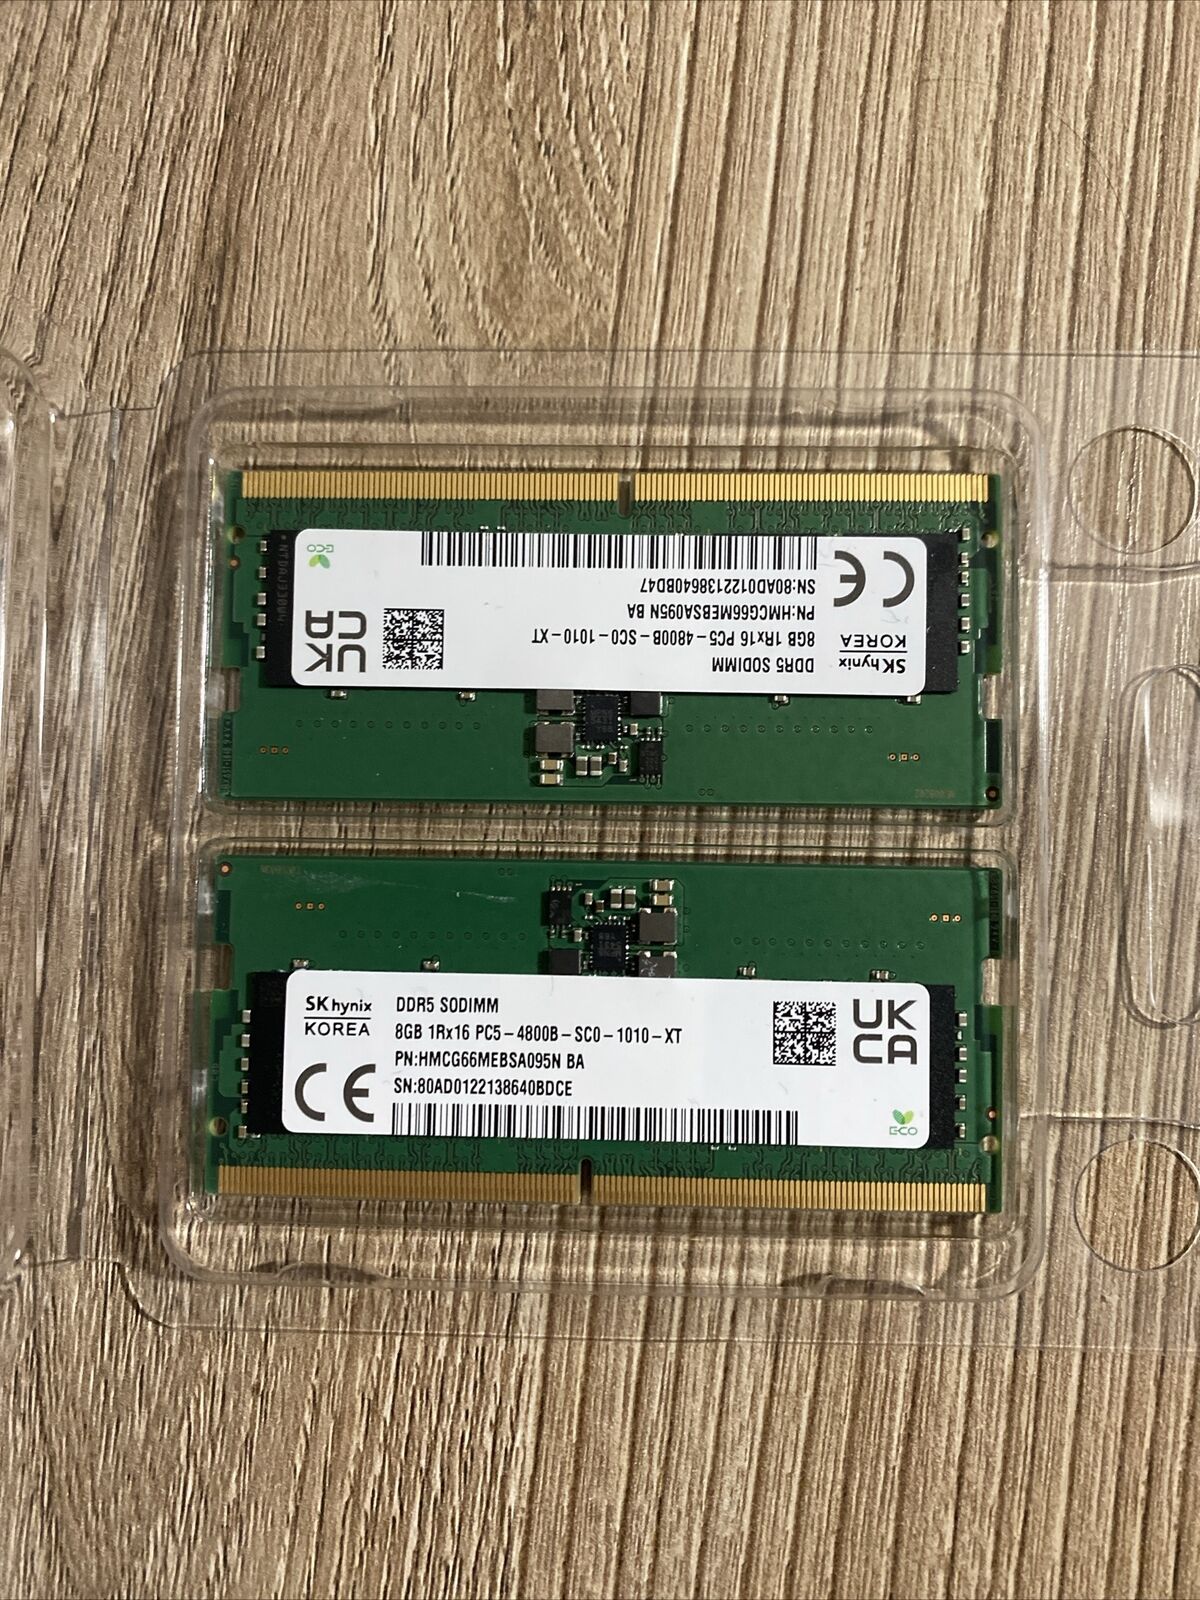 (Lot of 2) SKhynix 8GB 1Rx16 PC5-4800B DDR5 SODIMM Memory RAM